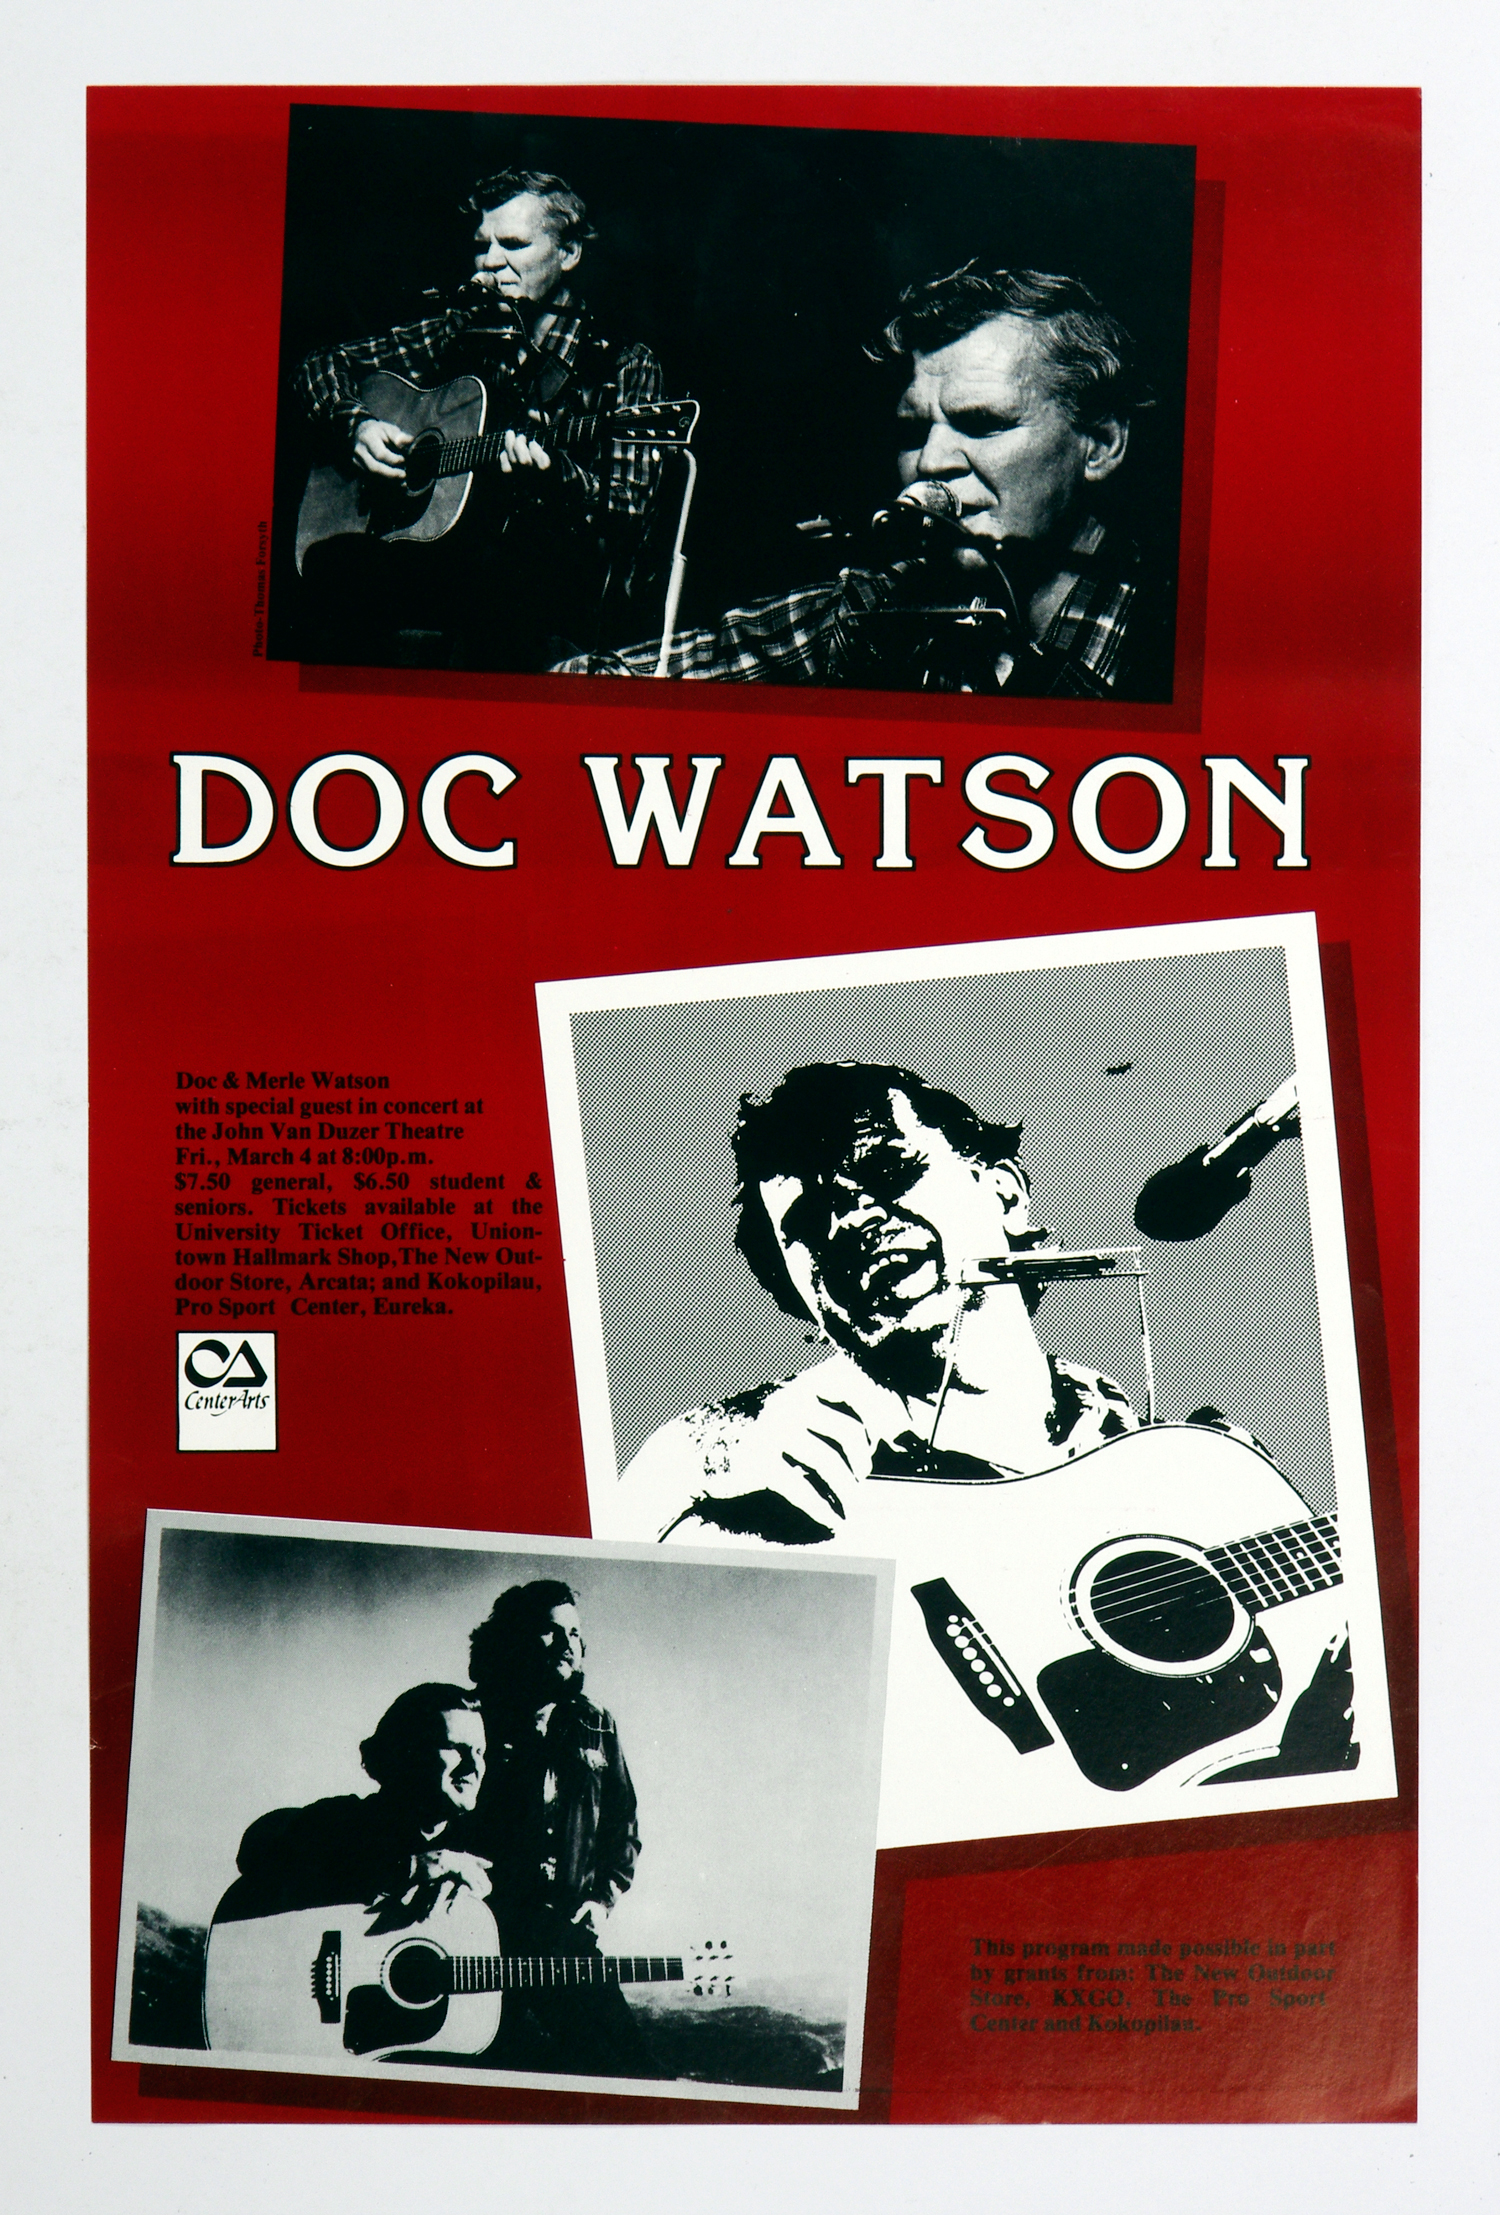 Doc and Merle Watson Poster 1983 Mar 4 John Van Duzer Theatre Humboldt State 